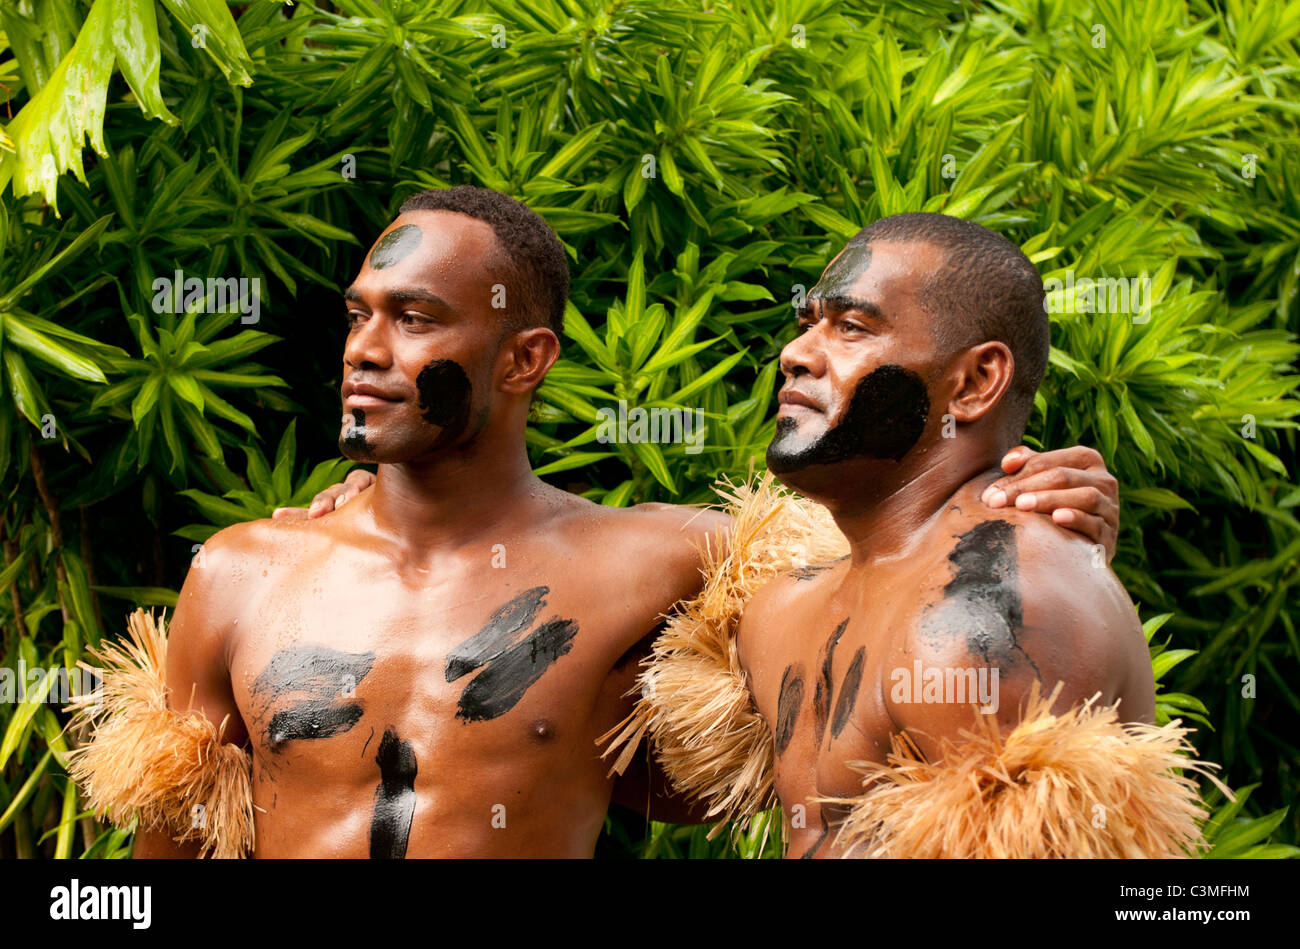 Fiji Naked Men